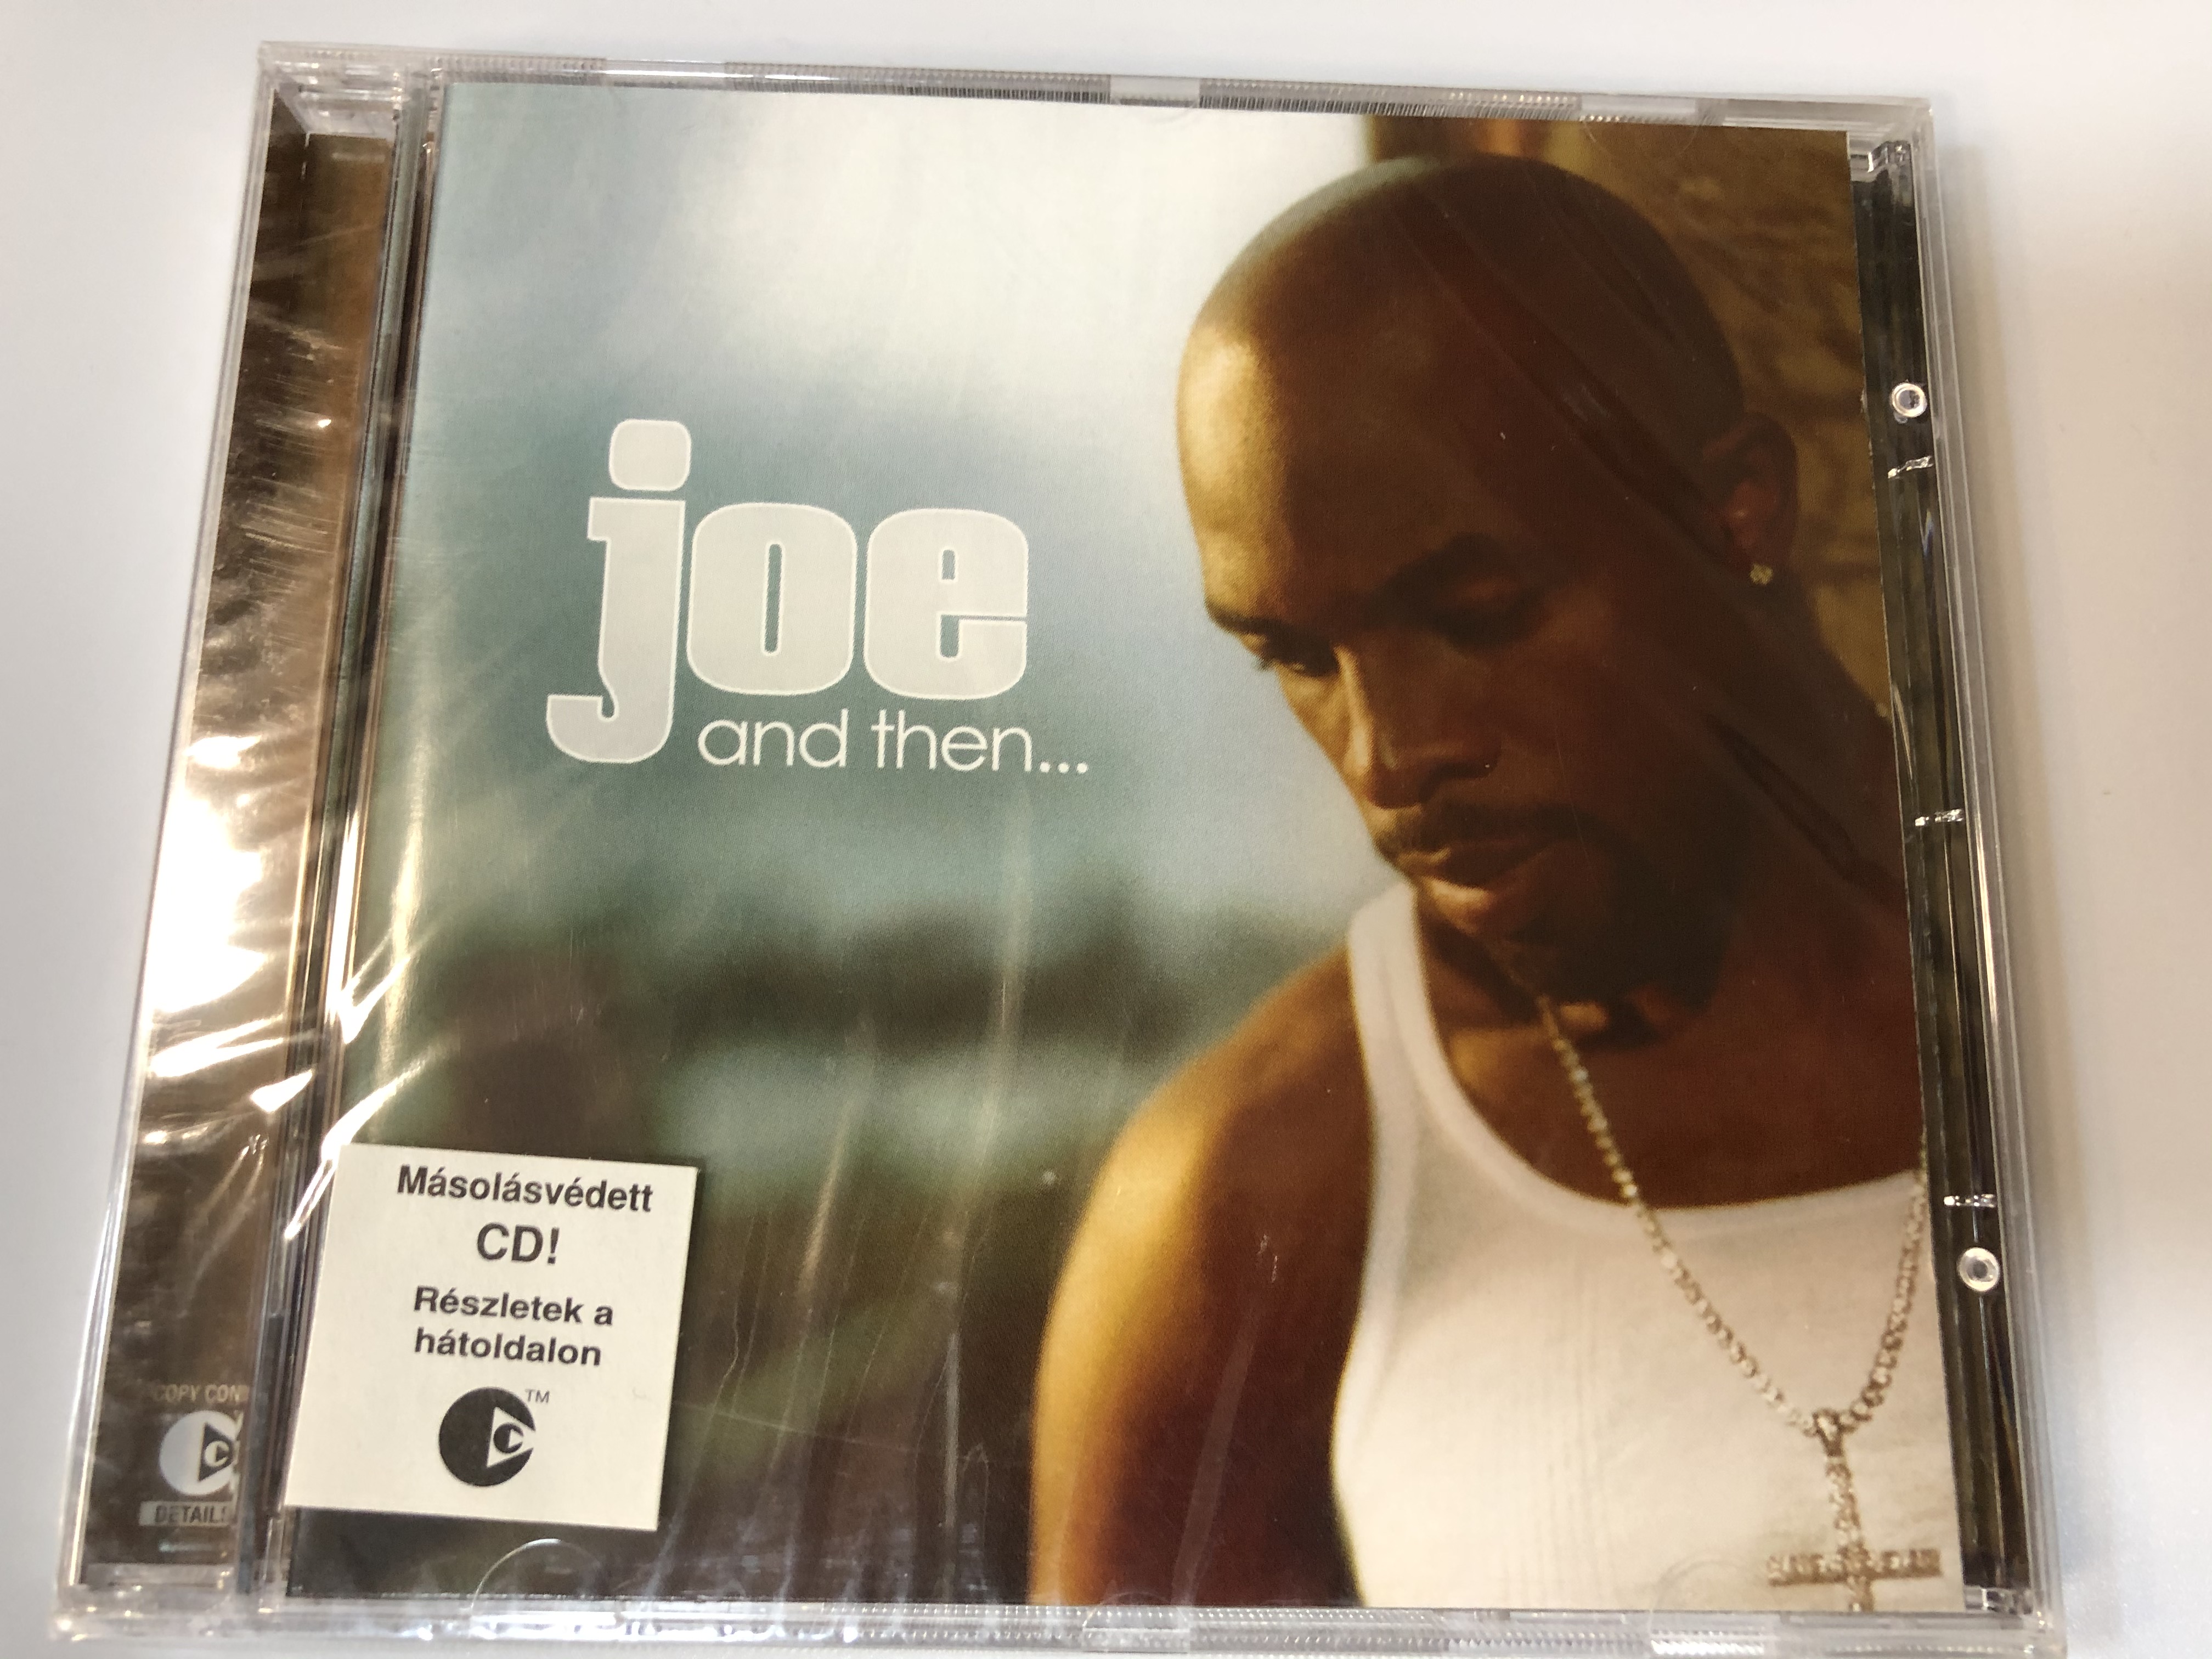 joe-and-then...-jive-audio-cd-2004-82876-58914-2-1-.jpg